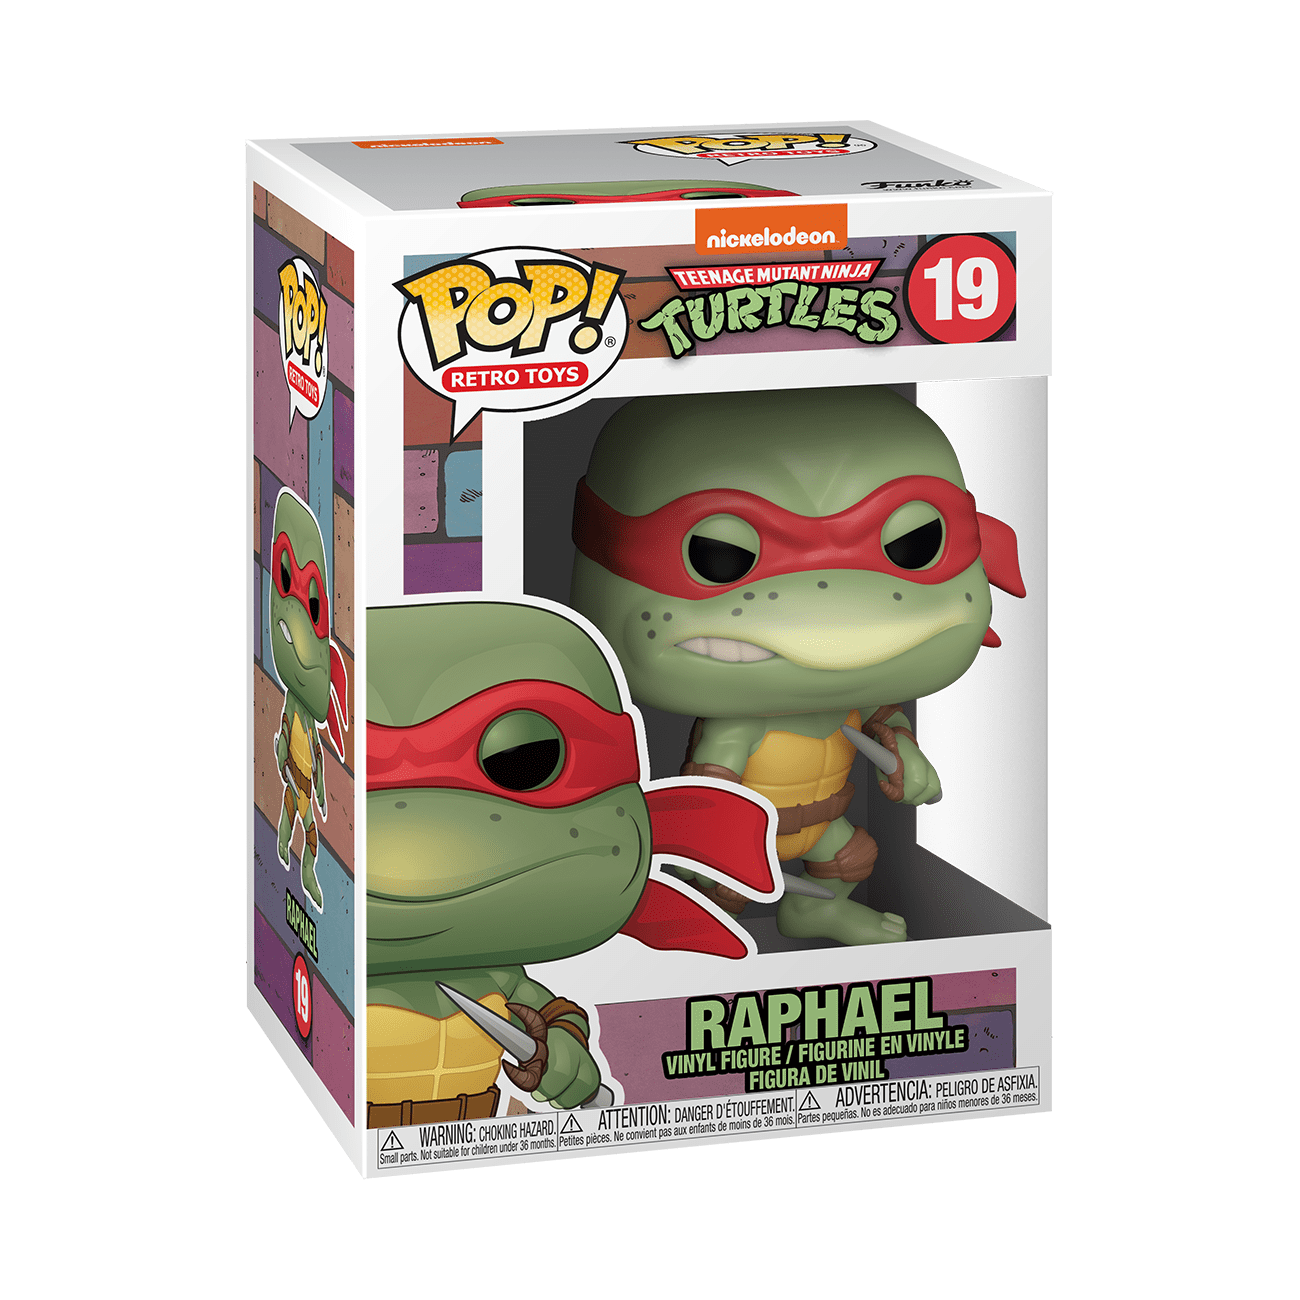 Raphael 19